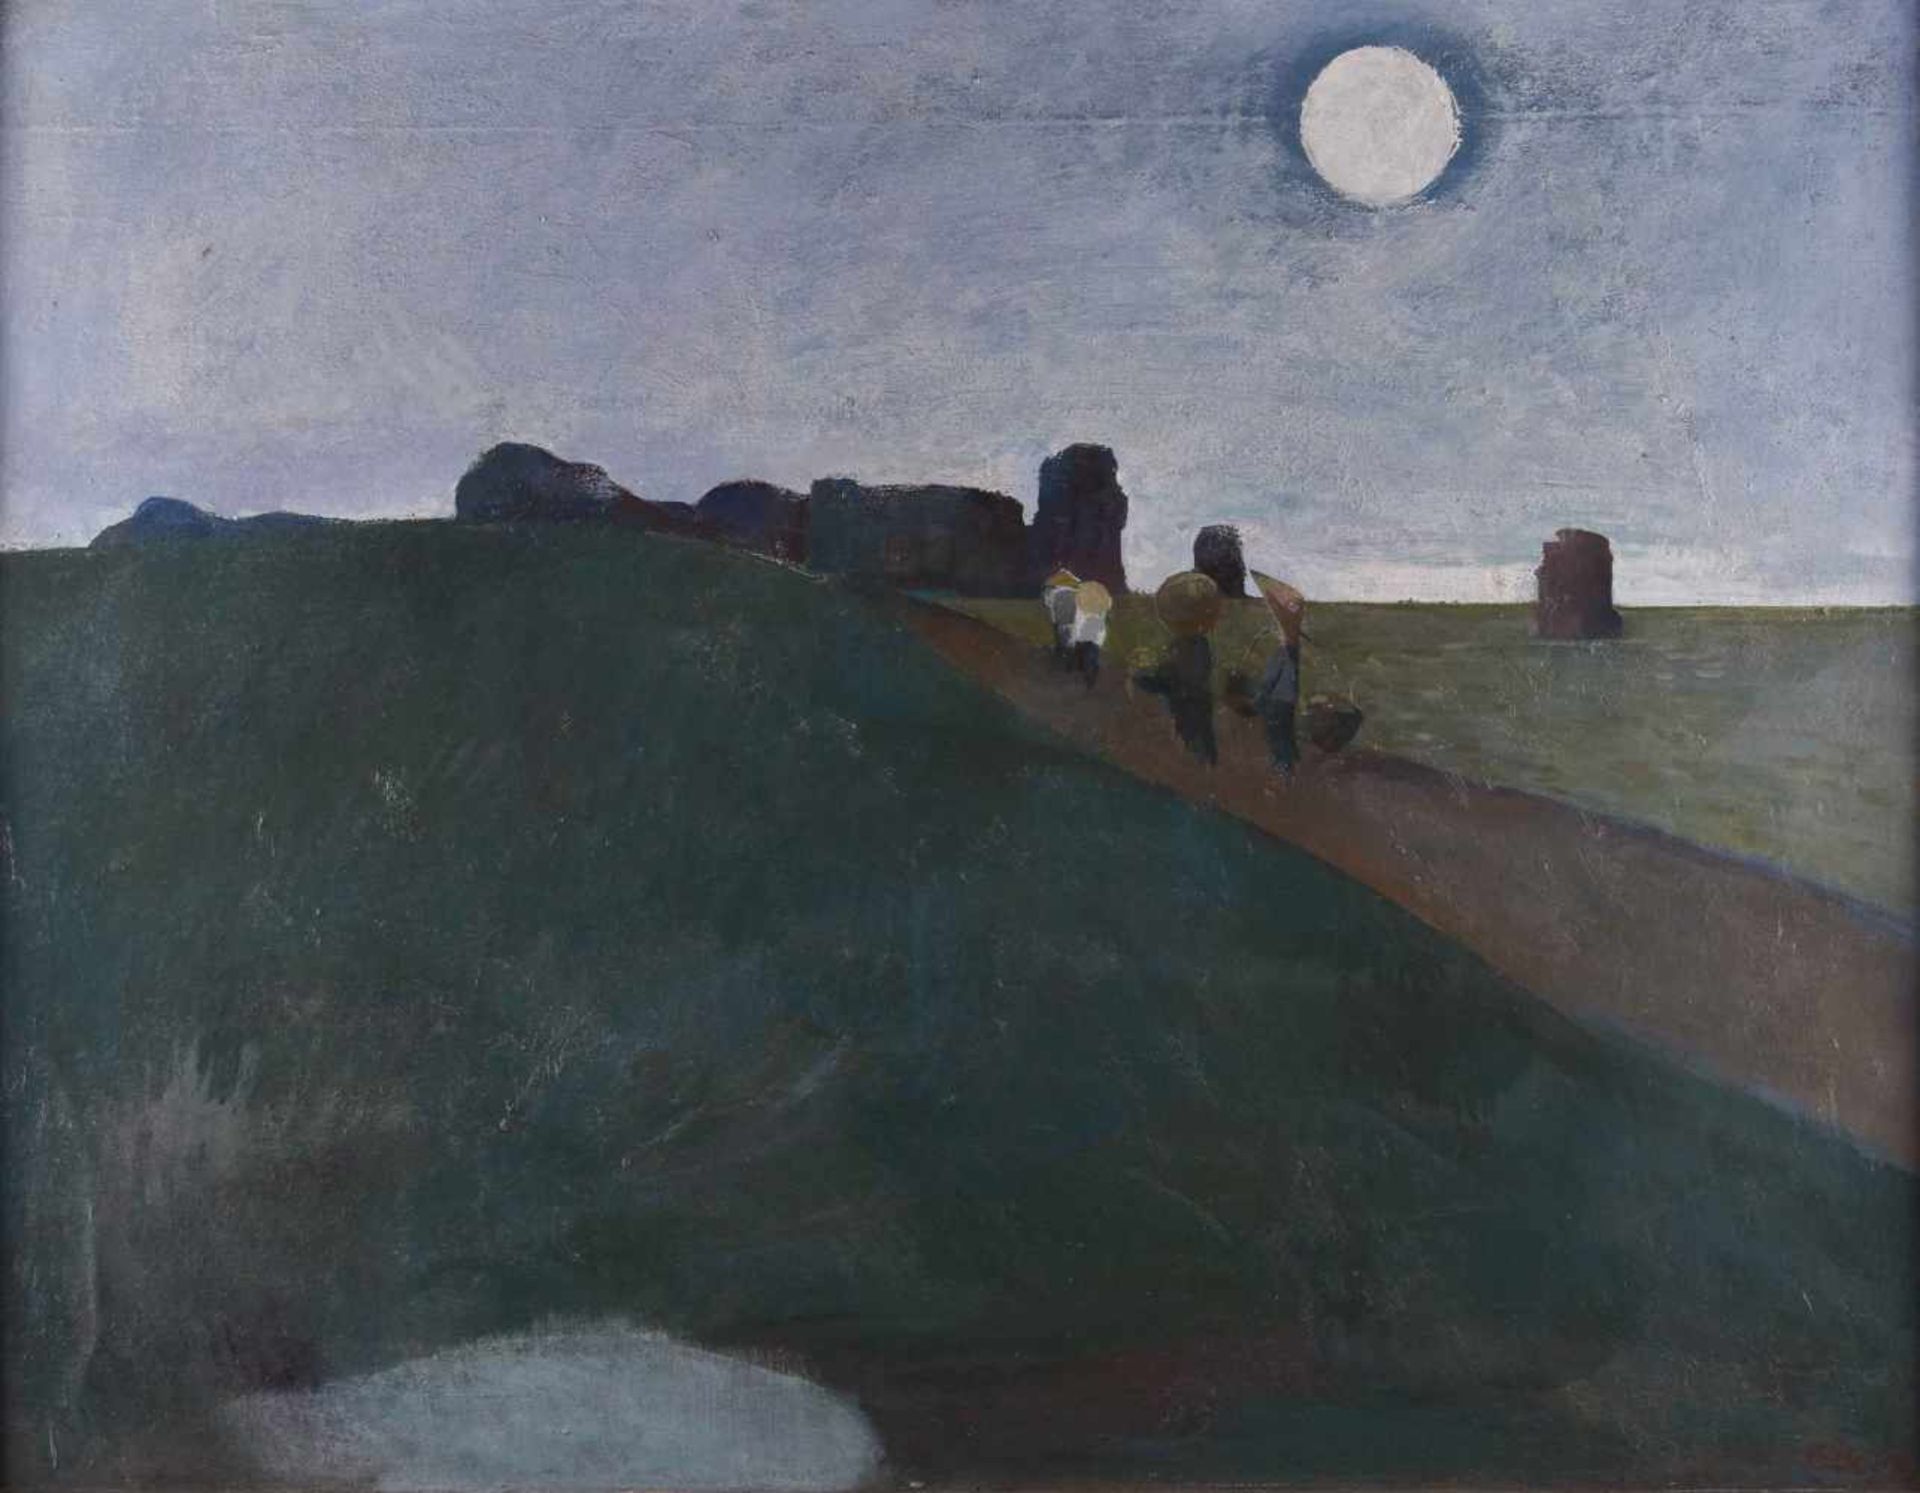 Fritz EISEL (1929-2010)"Mond über dem roten Fluss"painting oil / hardboard, 70 cm x 90 cm, with